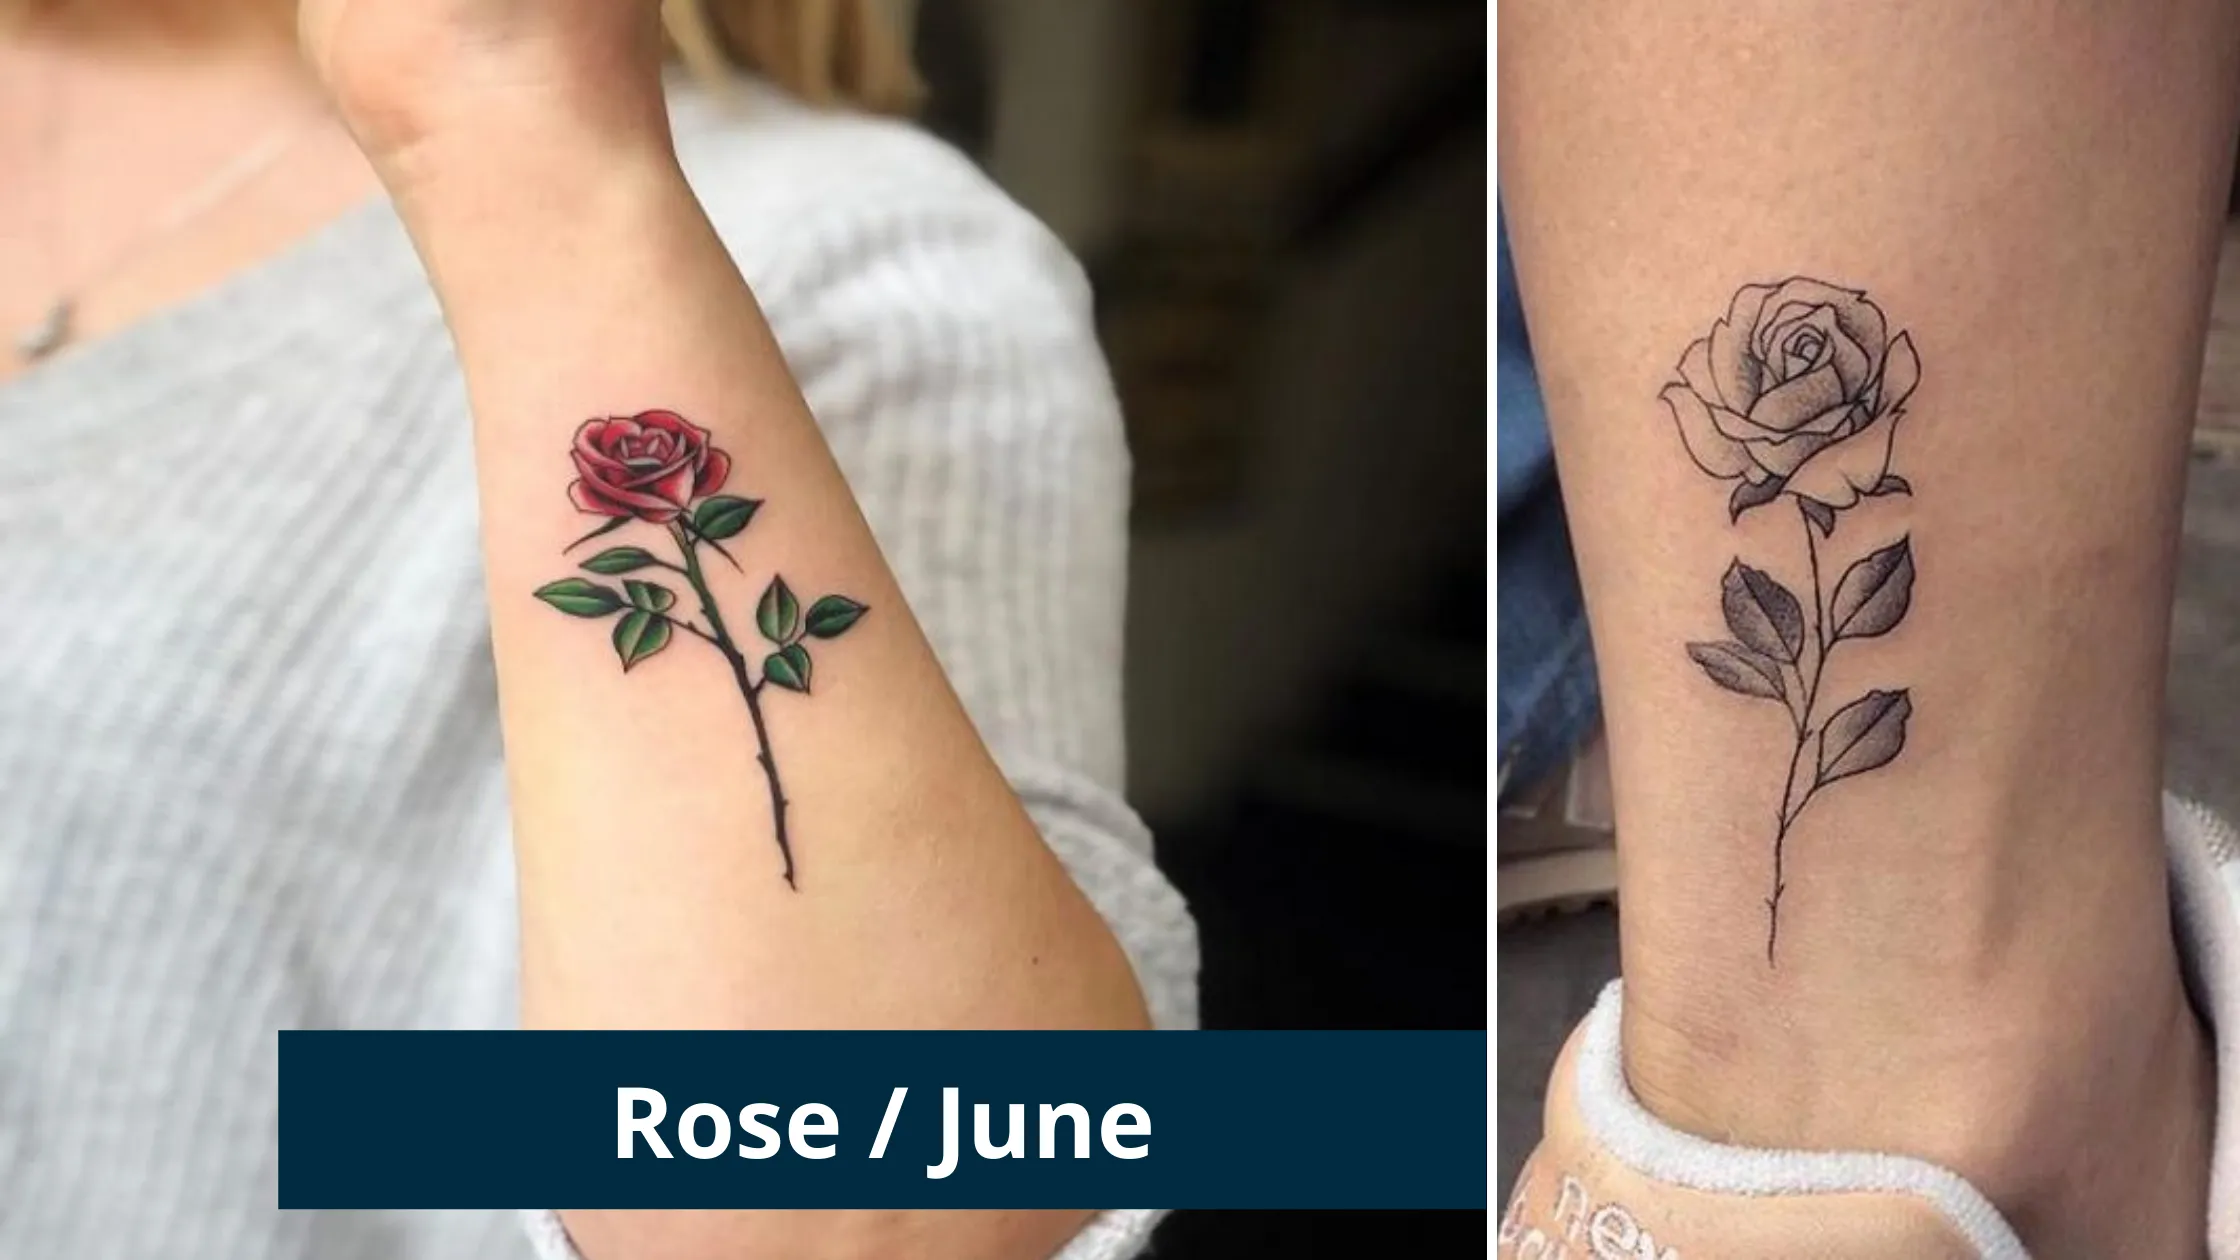 Birth flowers tattoo ideas 2021 - Rose June